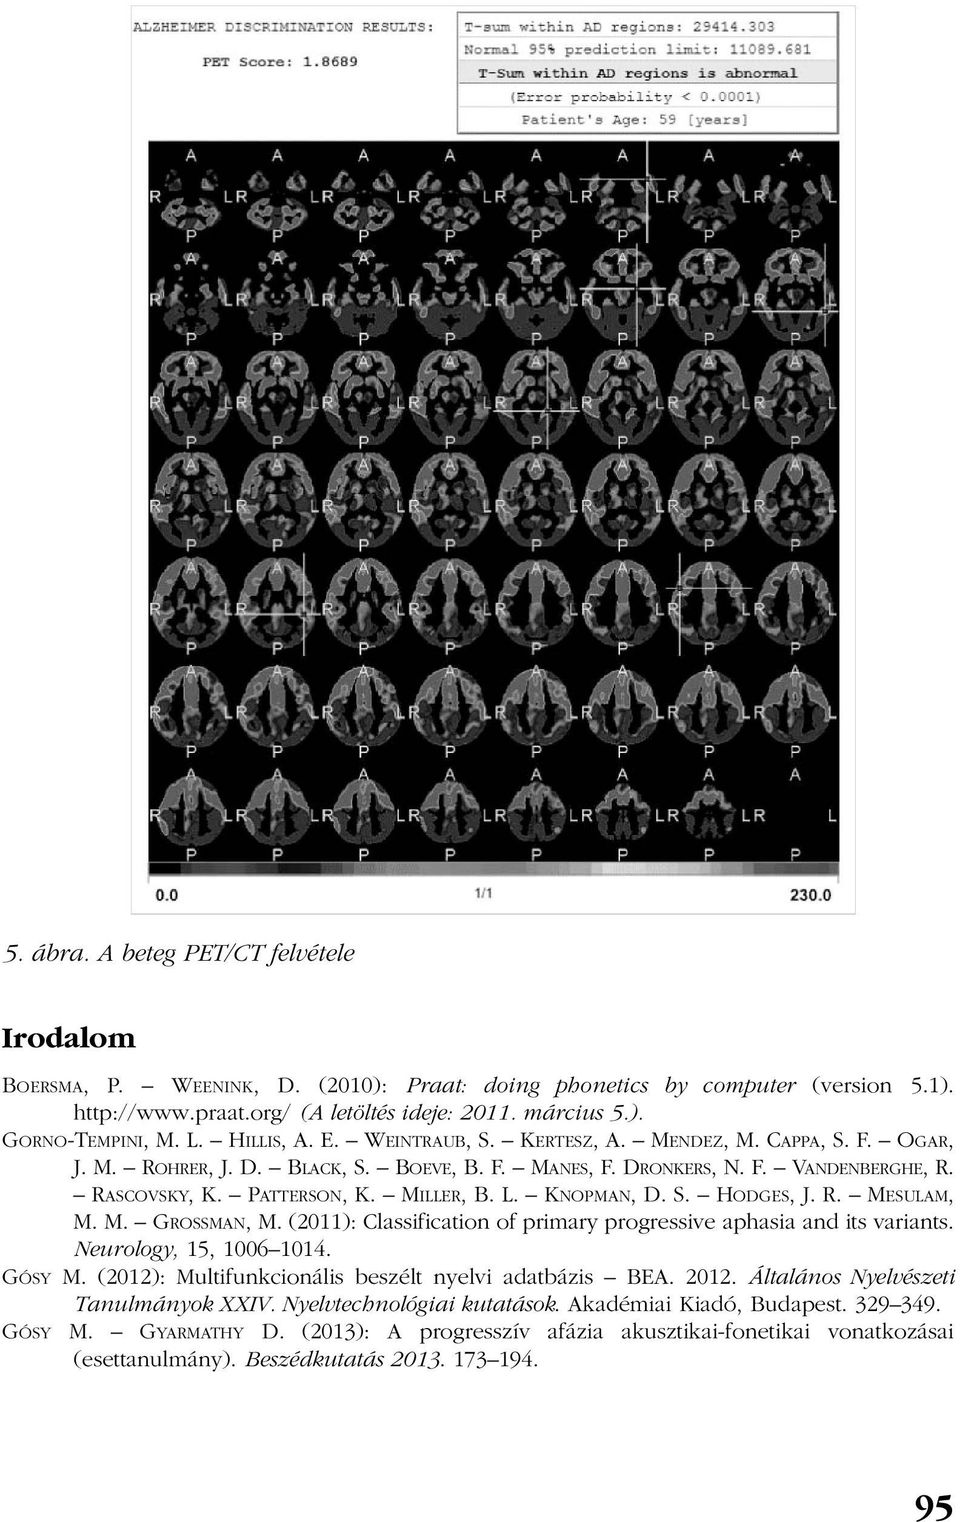 KNOPMAN, D. S. HODGES, J. R. MESULAM, M. M. GROSSMAN, M. (2011): Classification of primary progressive aphasia and its variants. Neurology, 15, 1006 1014. GÓSY M.